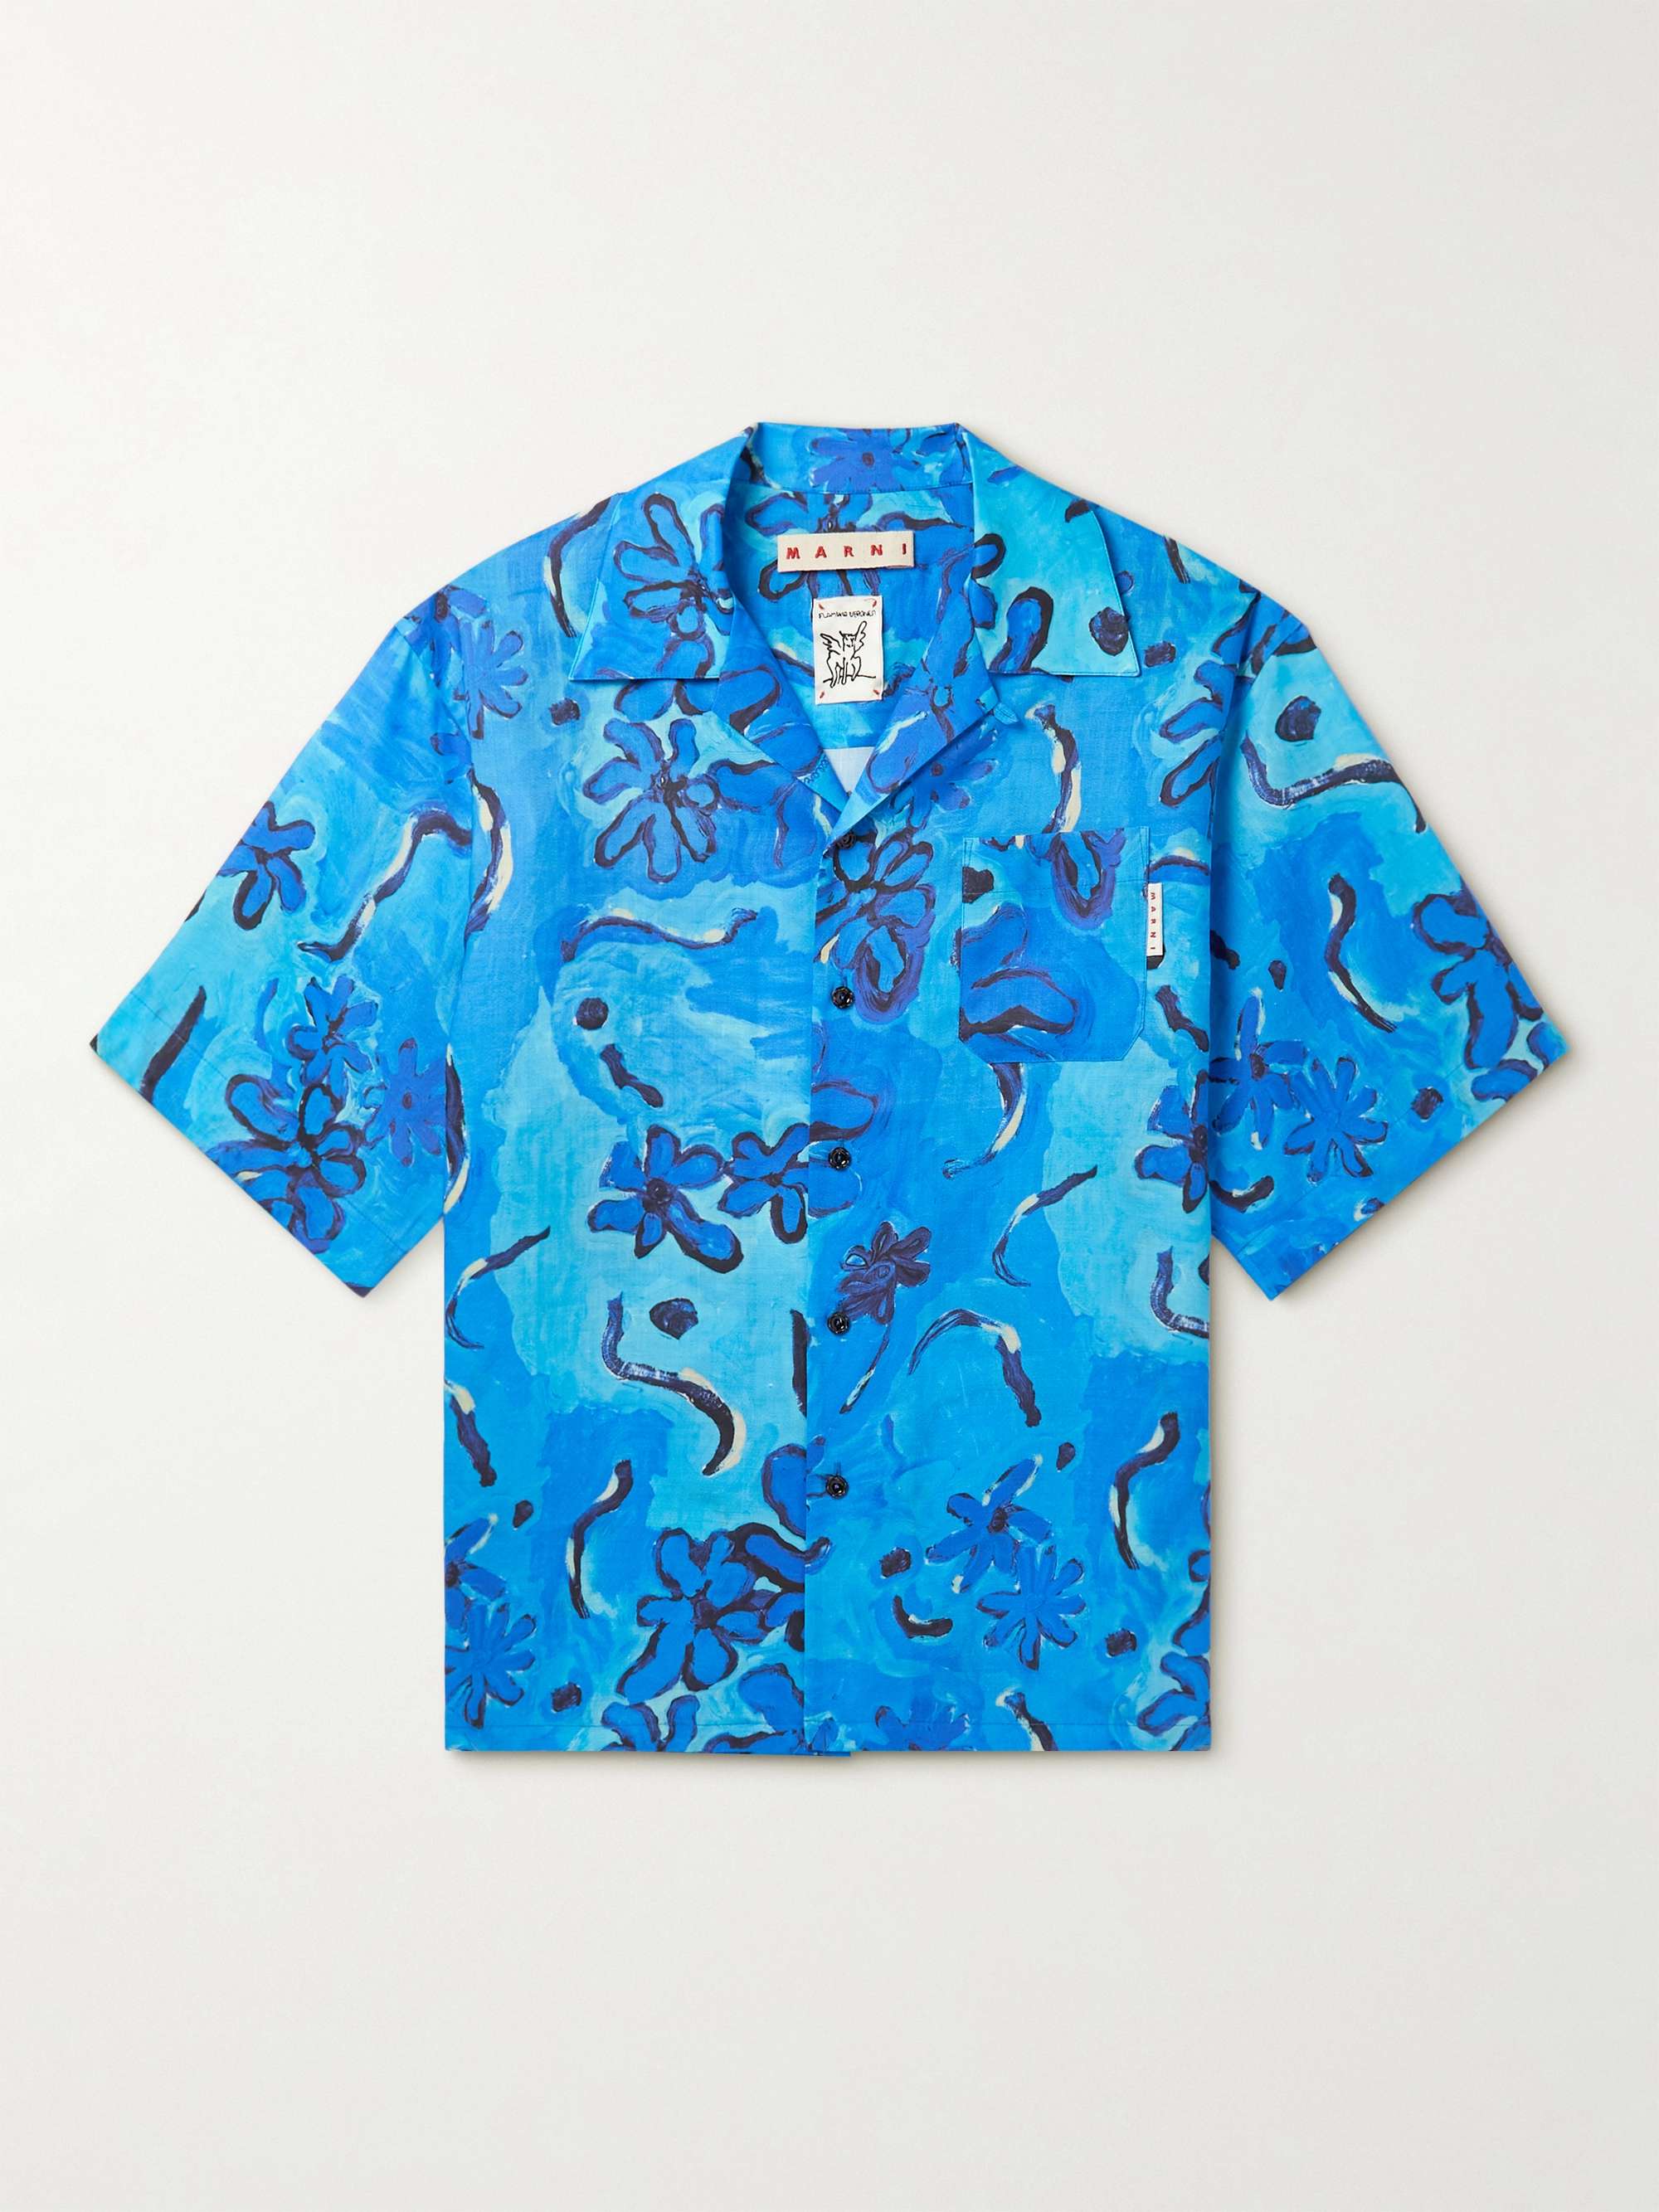 MARNI Camp-Collar Printed Ramie Shirt